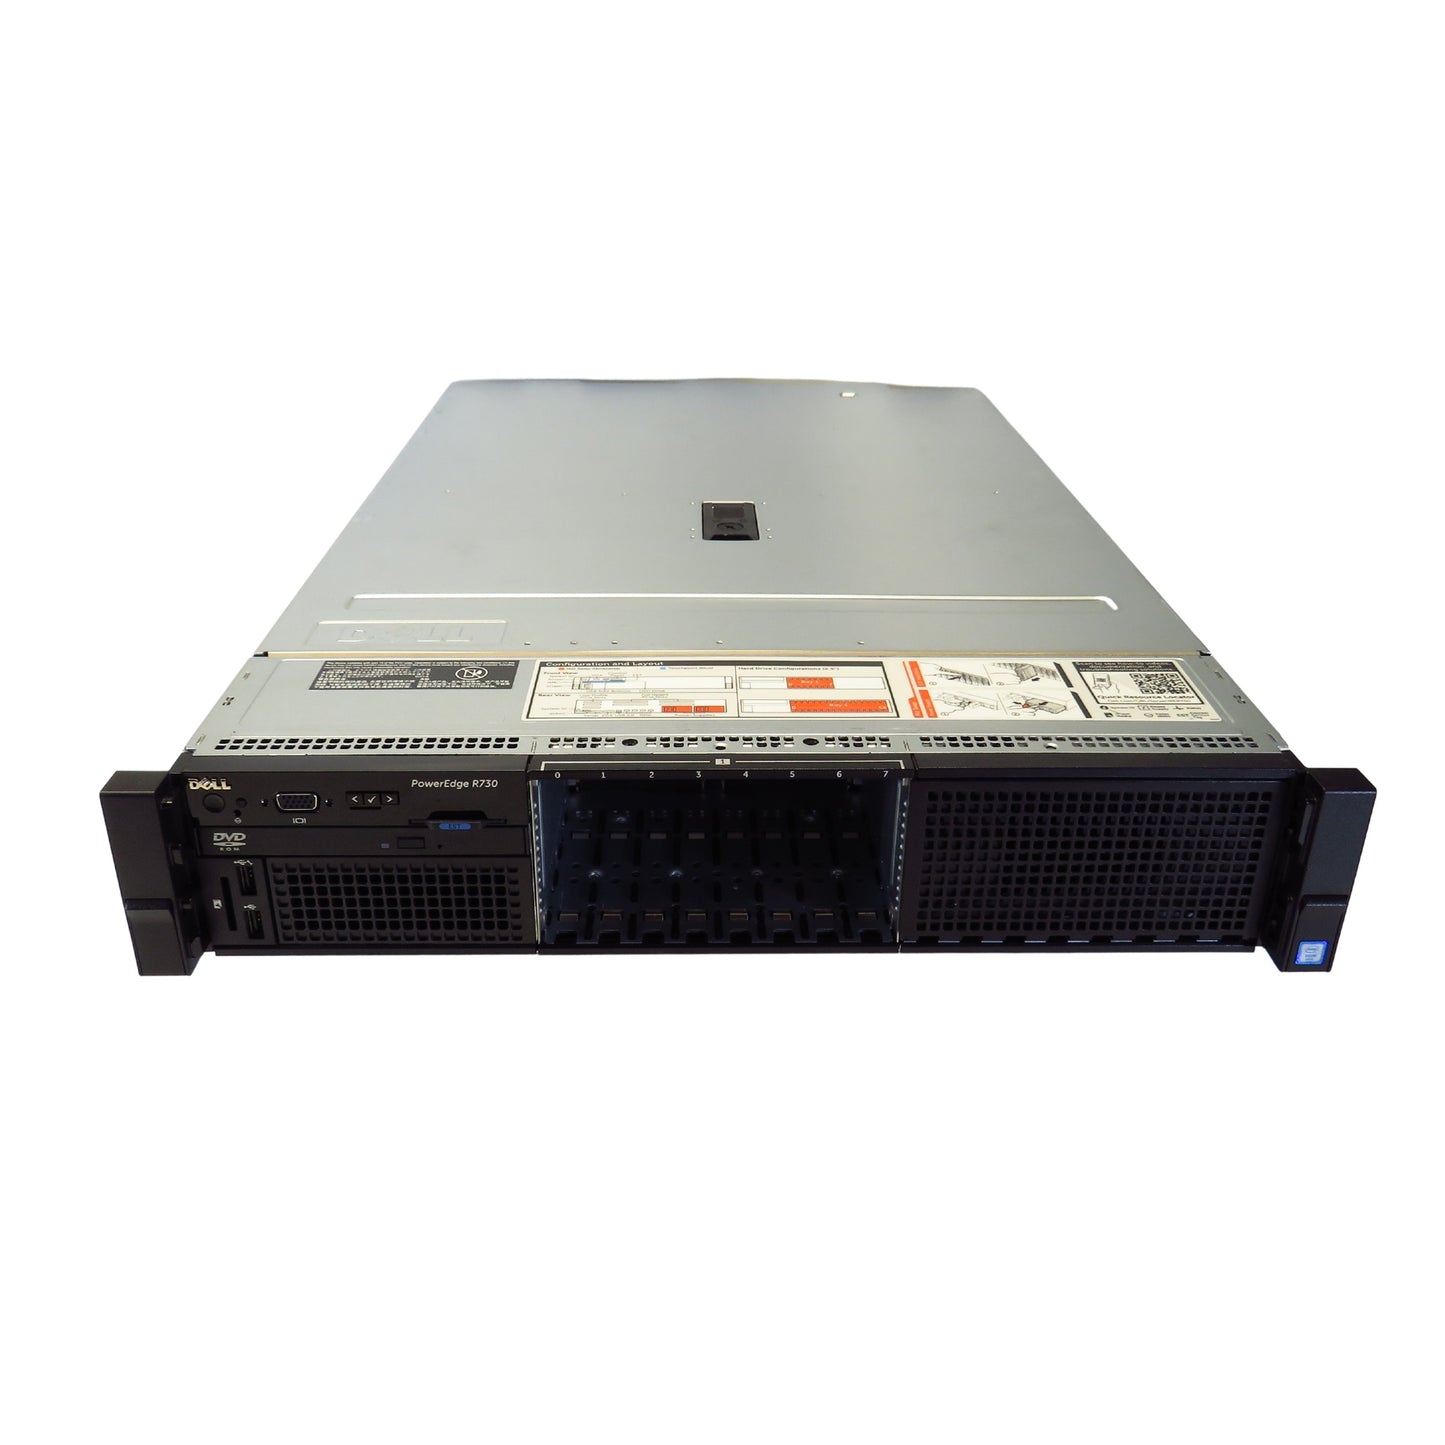 Dell PowerEdge R730 8 Bay 2.5" Intel E5-2620v4 2.1GHz 16GB RAM 2U Server (Refurbished)